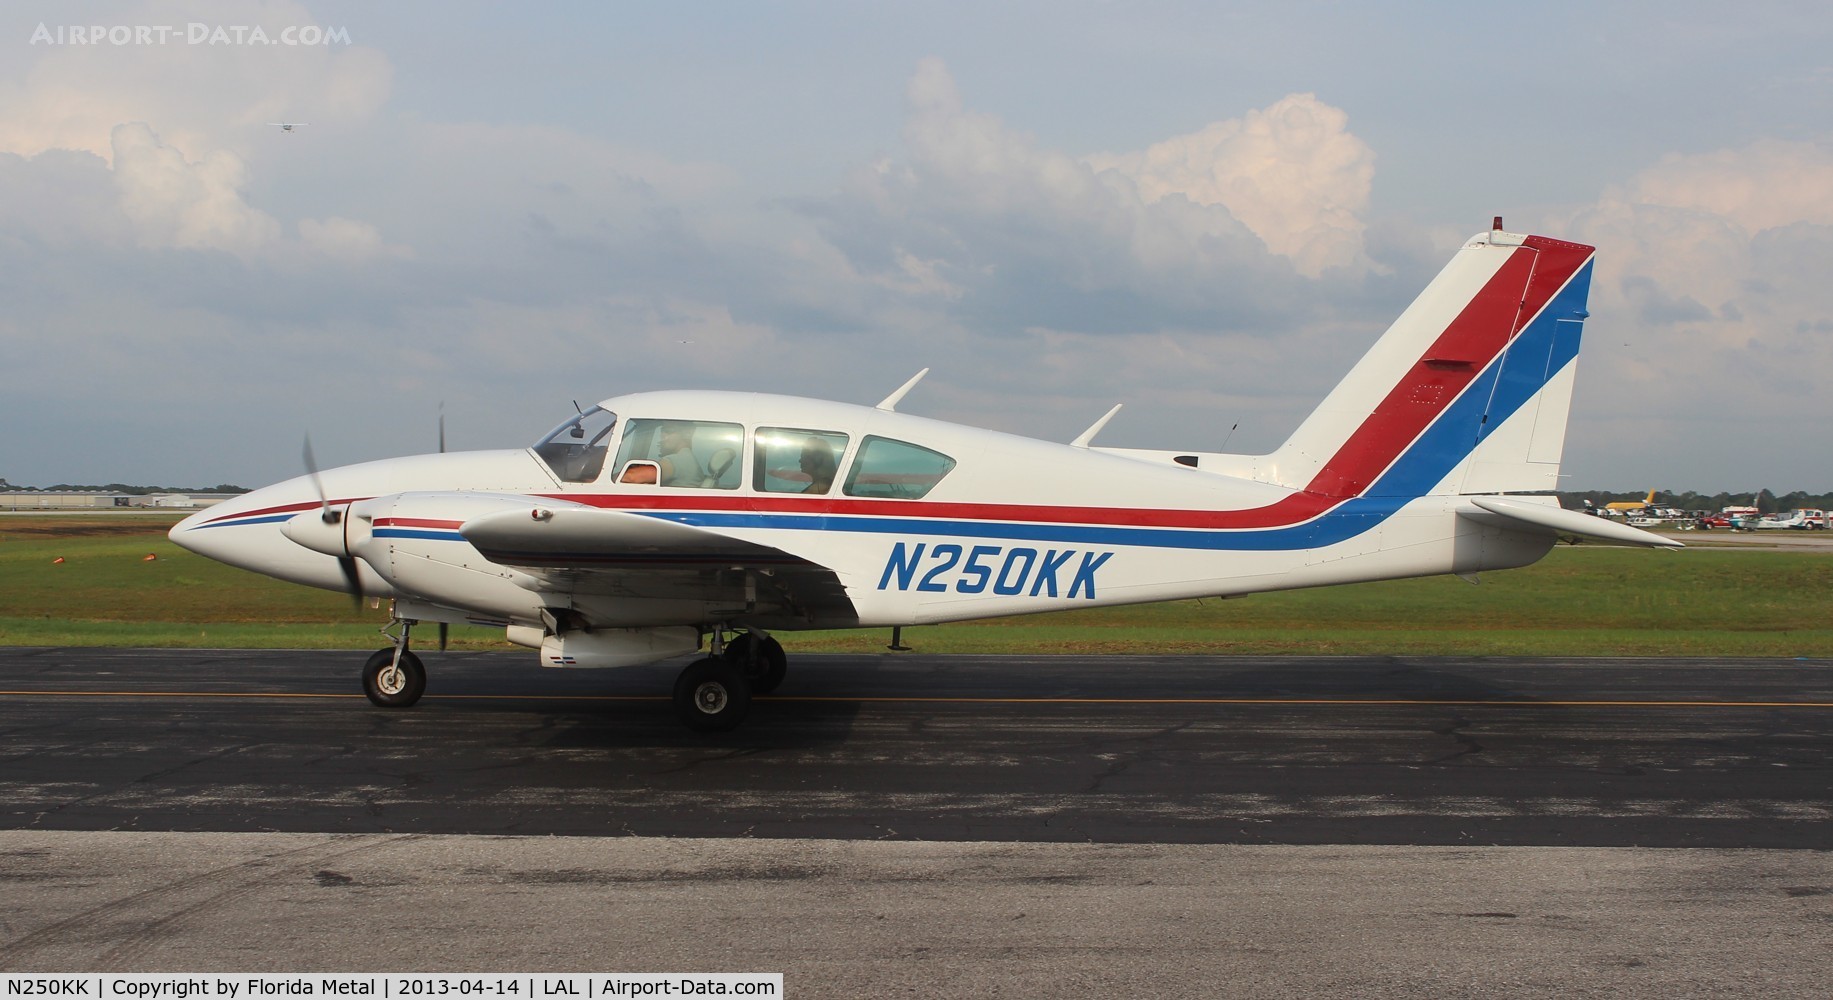 N250KK, 1976 Piper PA-23-250 C/N 27-7654188, Piper PA-23-250